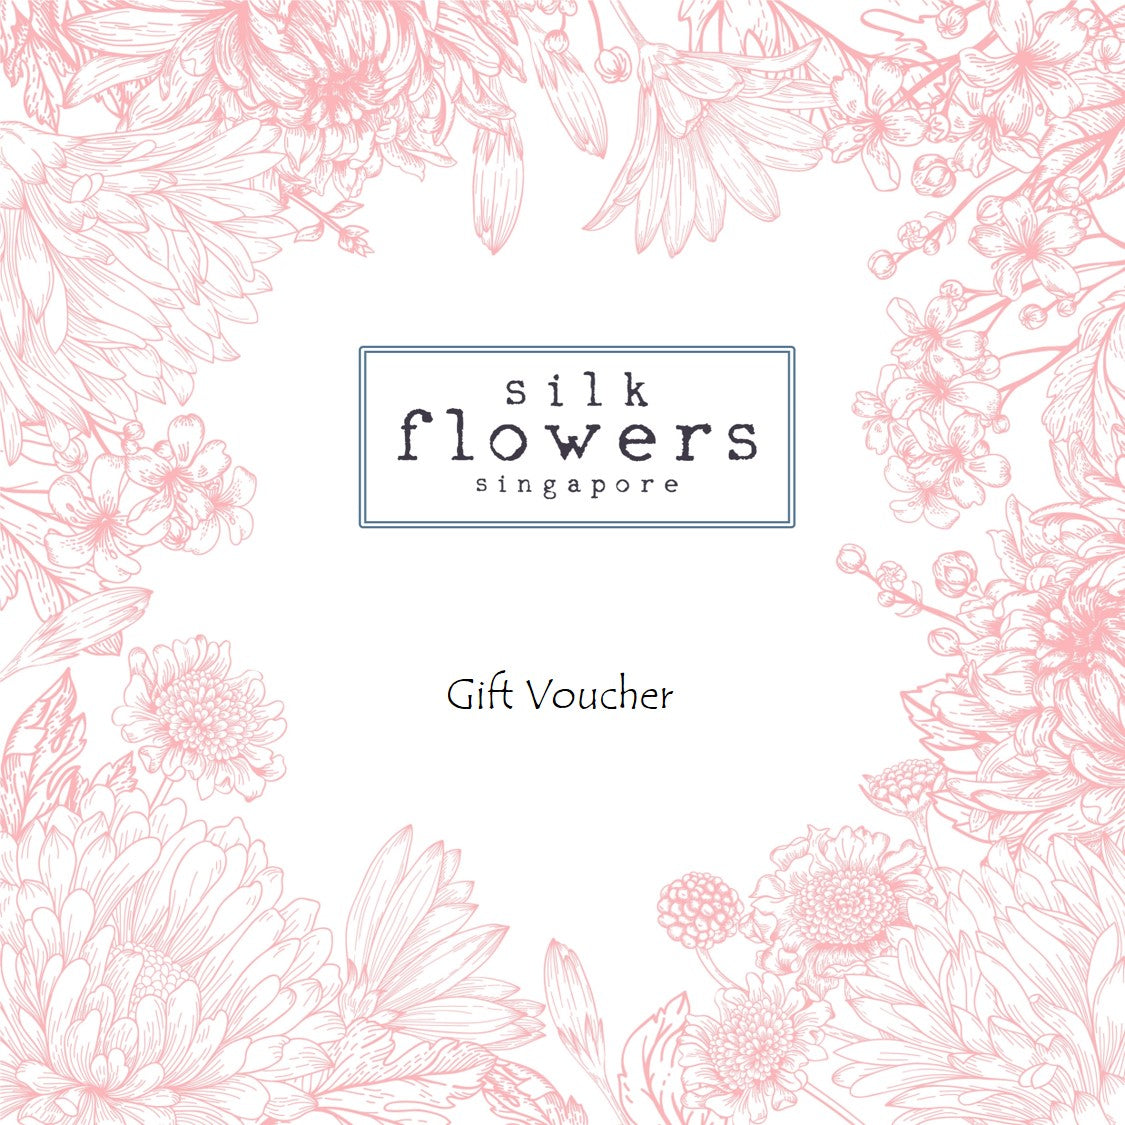 Silk Flowers Singapore Gift Voucher